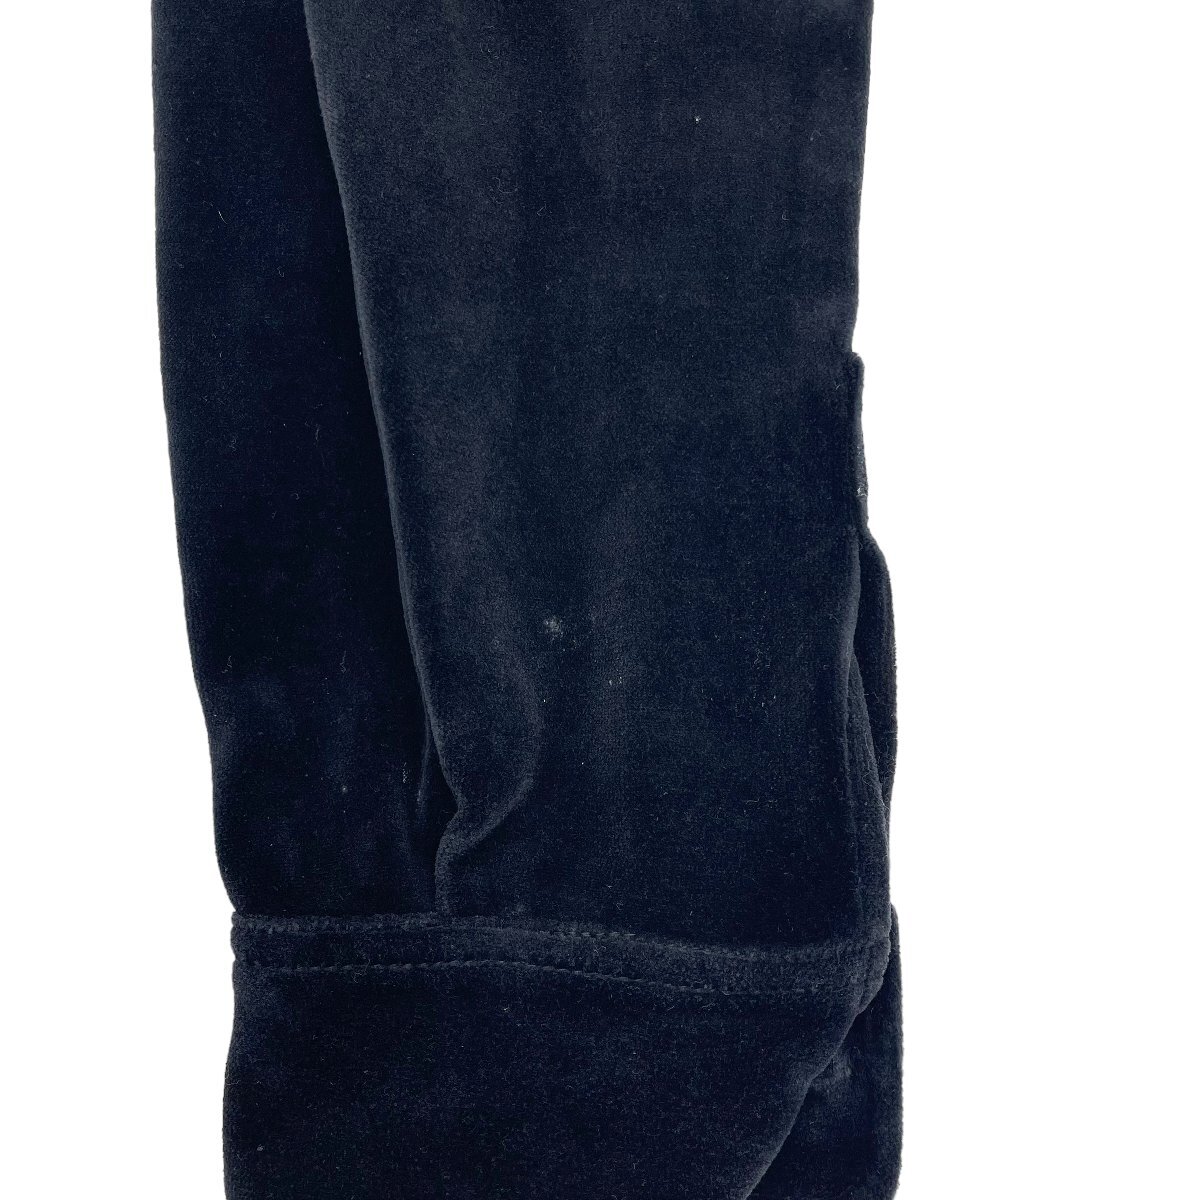 A937#EMPORIO ARMANI Emporio Armani # рубашка с длинным рукавом cut and sewn # черный 46 размер 